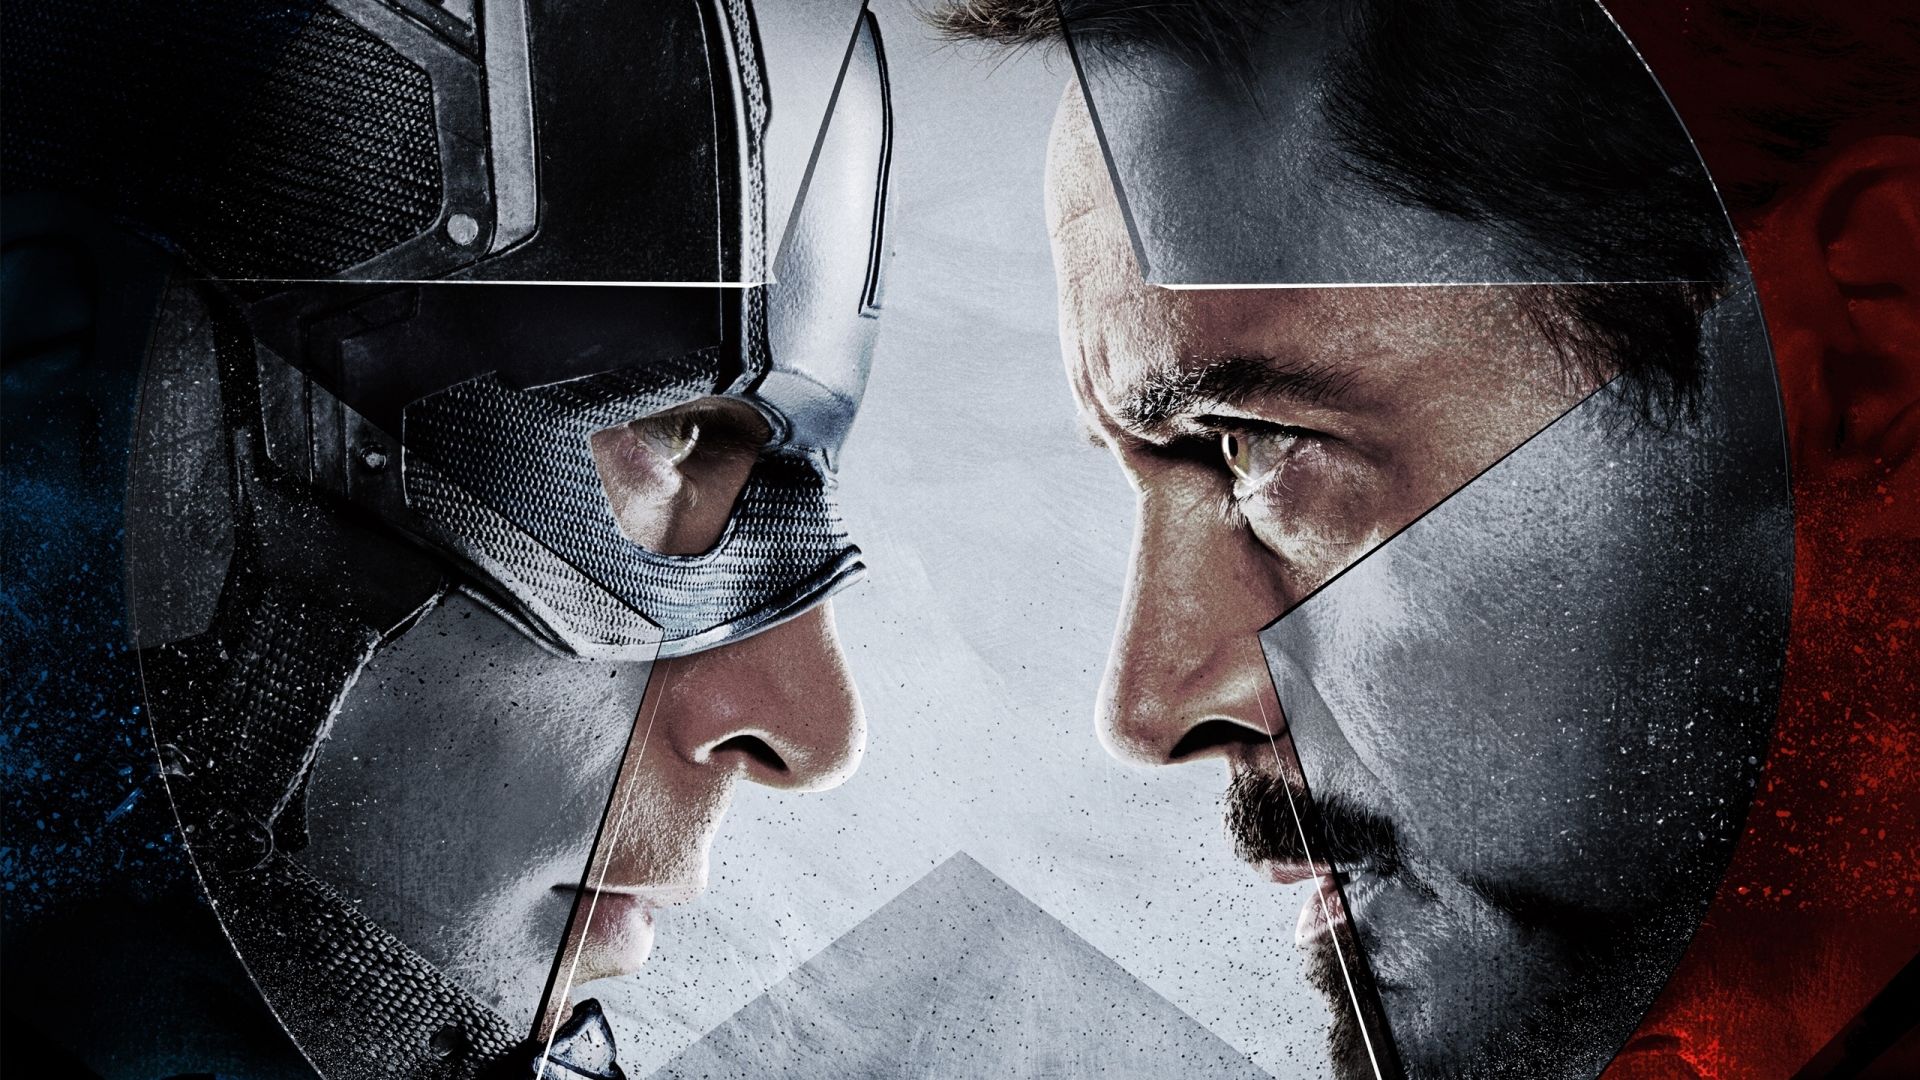 Wallpaper Captain America vs Iron man, marvel comics superheroes